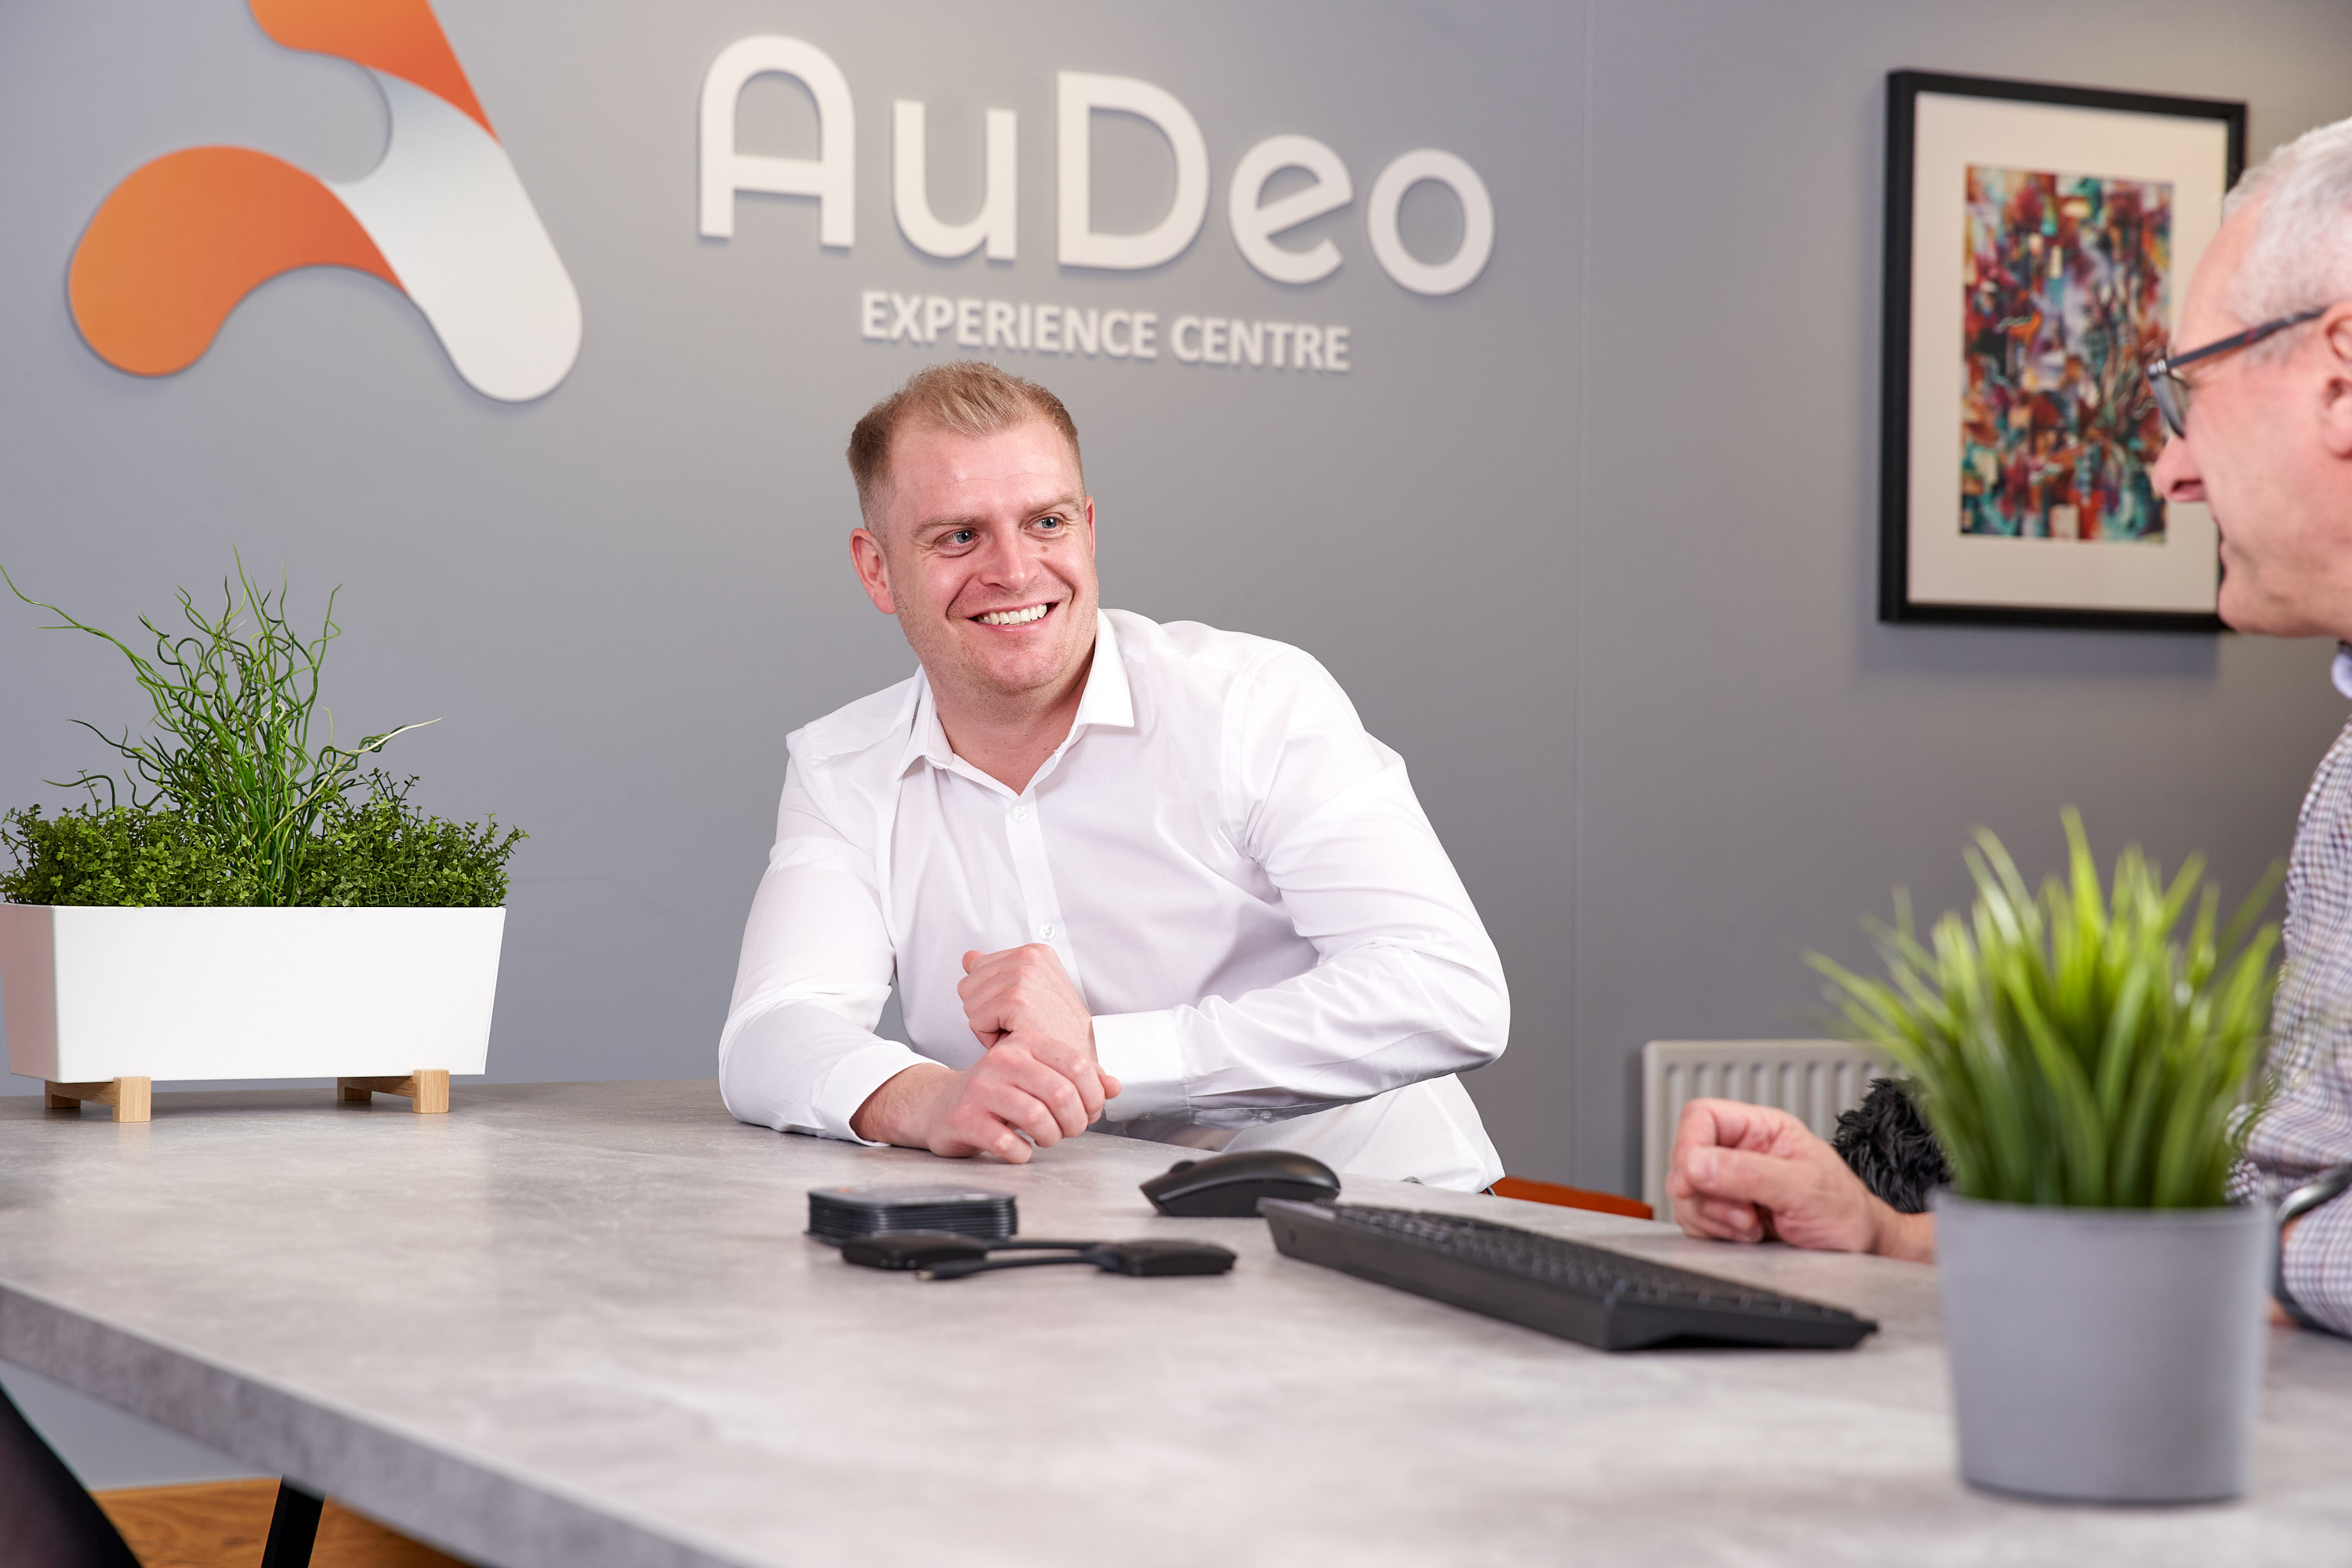 AuDeo Experience Centre